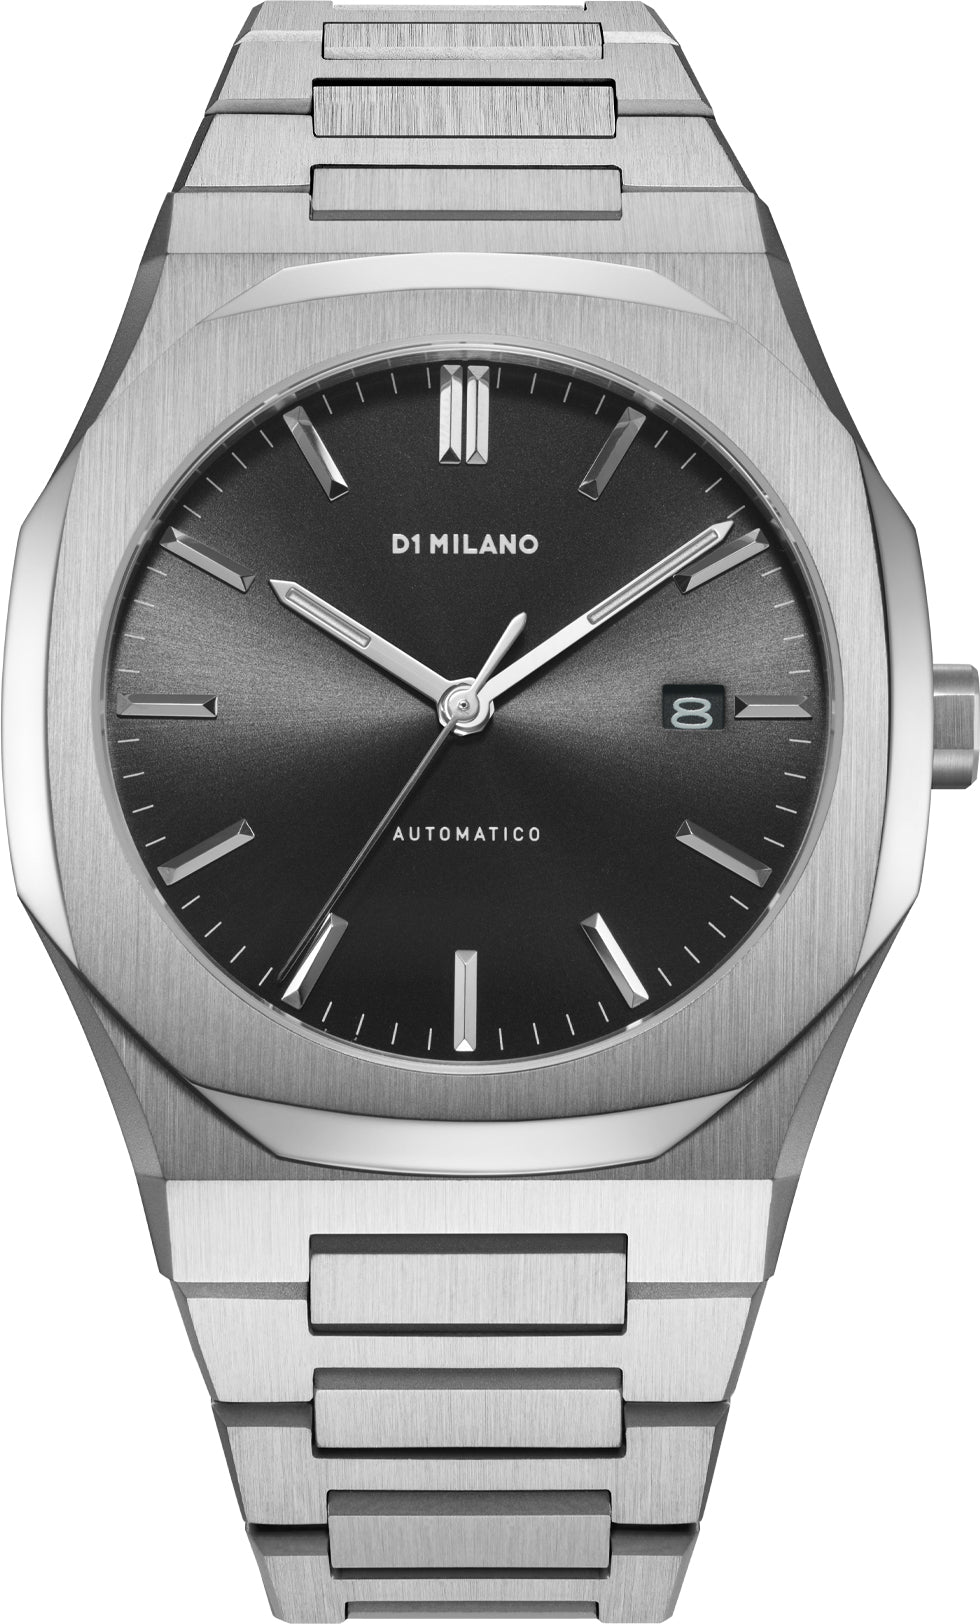 Photos - Wrist Watch Milano D1  Watch Automatic Bracelet Black - Black DLM-087 